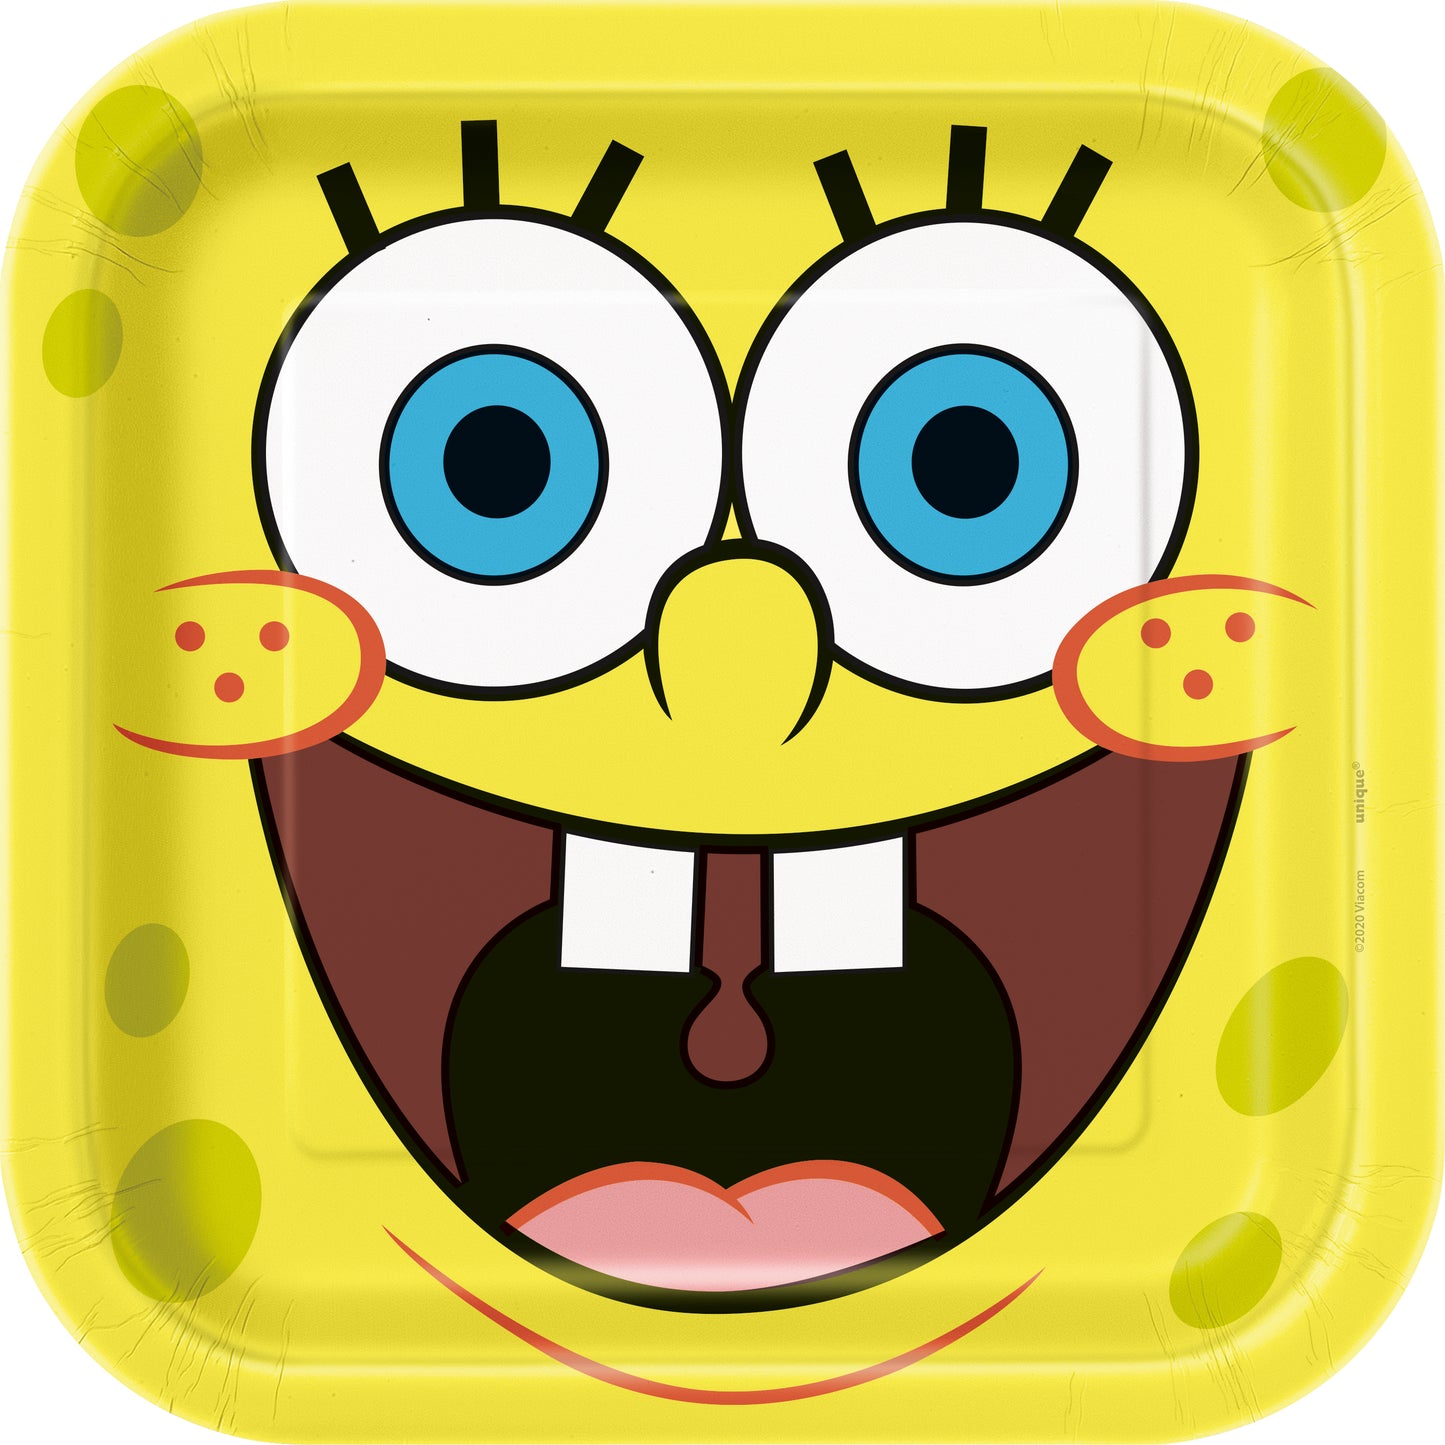 SpongeBob SquarePants Square 9" Dinner Plates, 8-pc